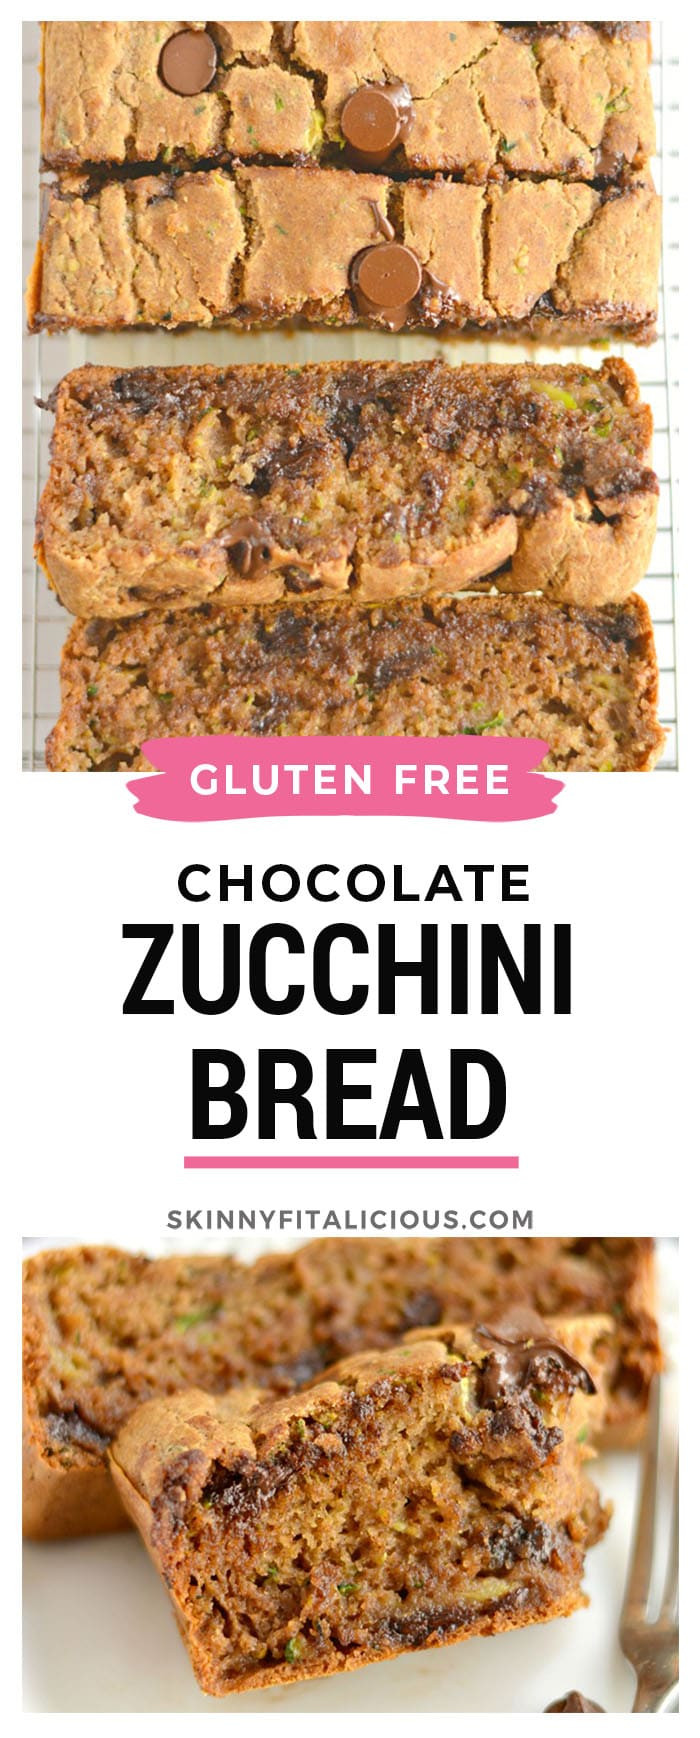 Low Calorie Gluten Free Bread
 Chocolate Zucchini Bread GF Low Cal Skinny Fitalicious